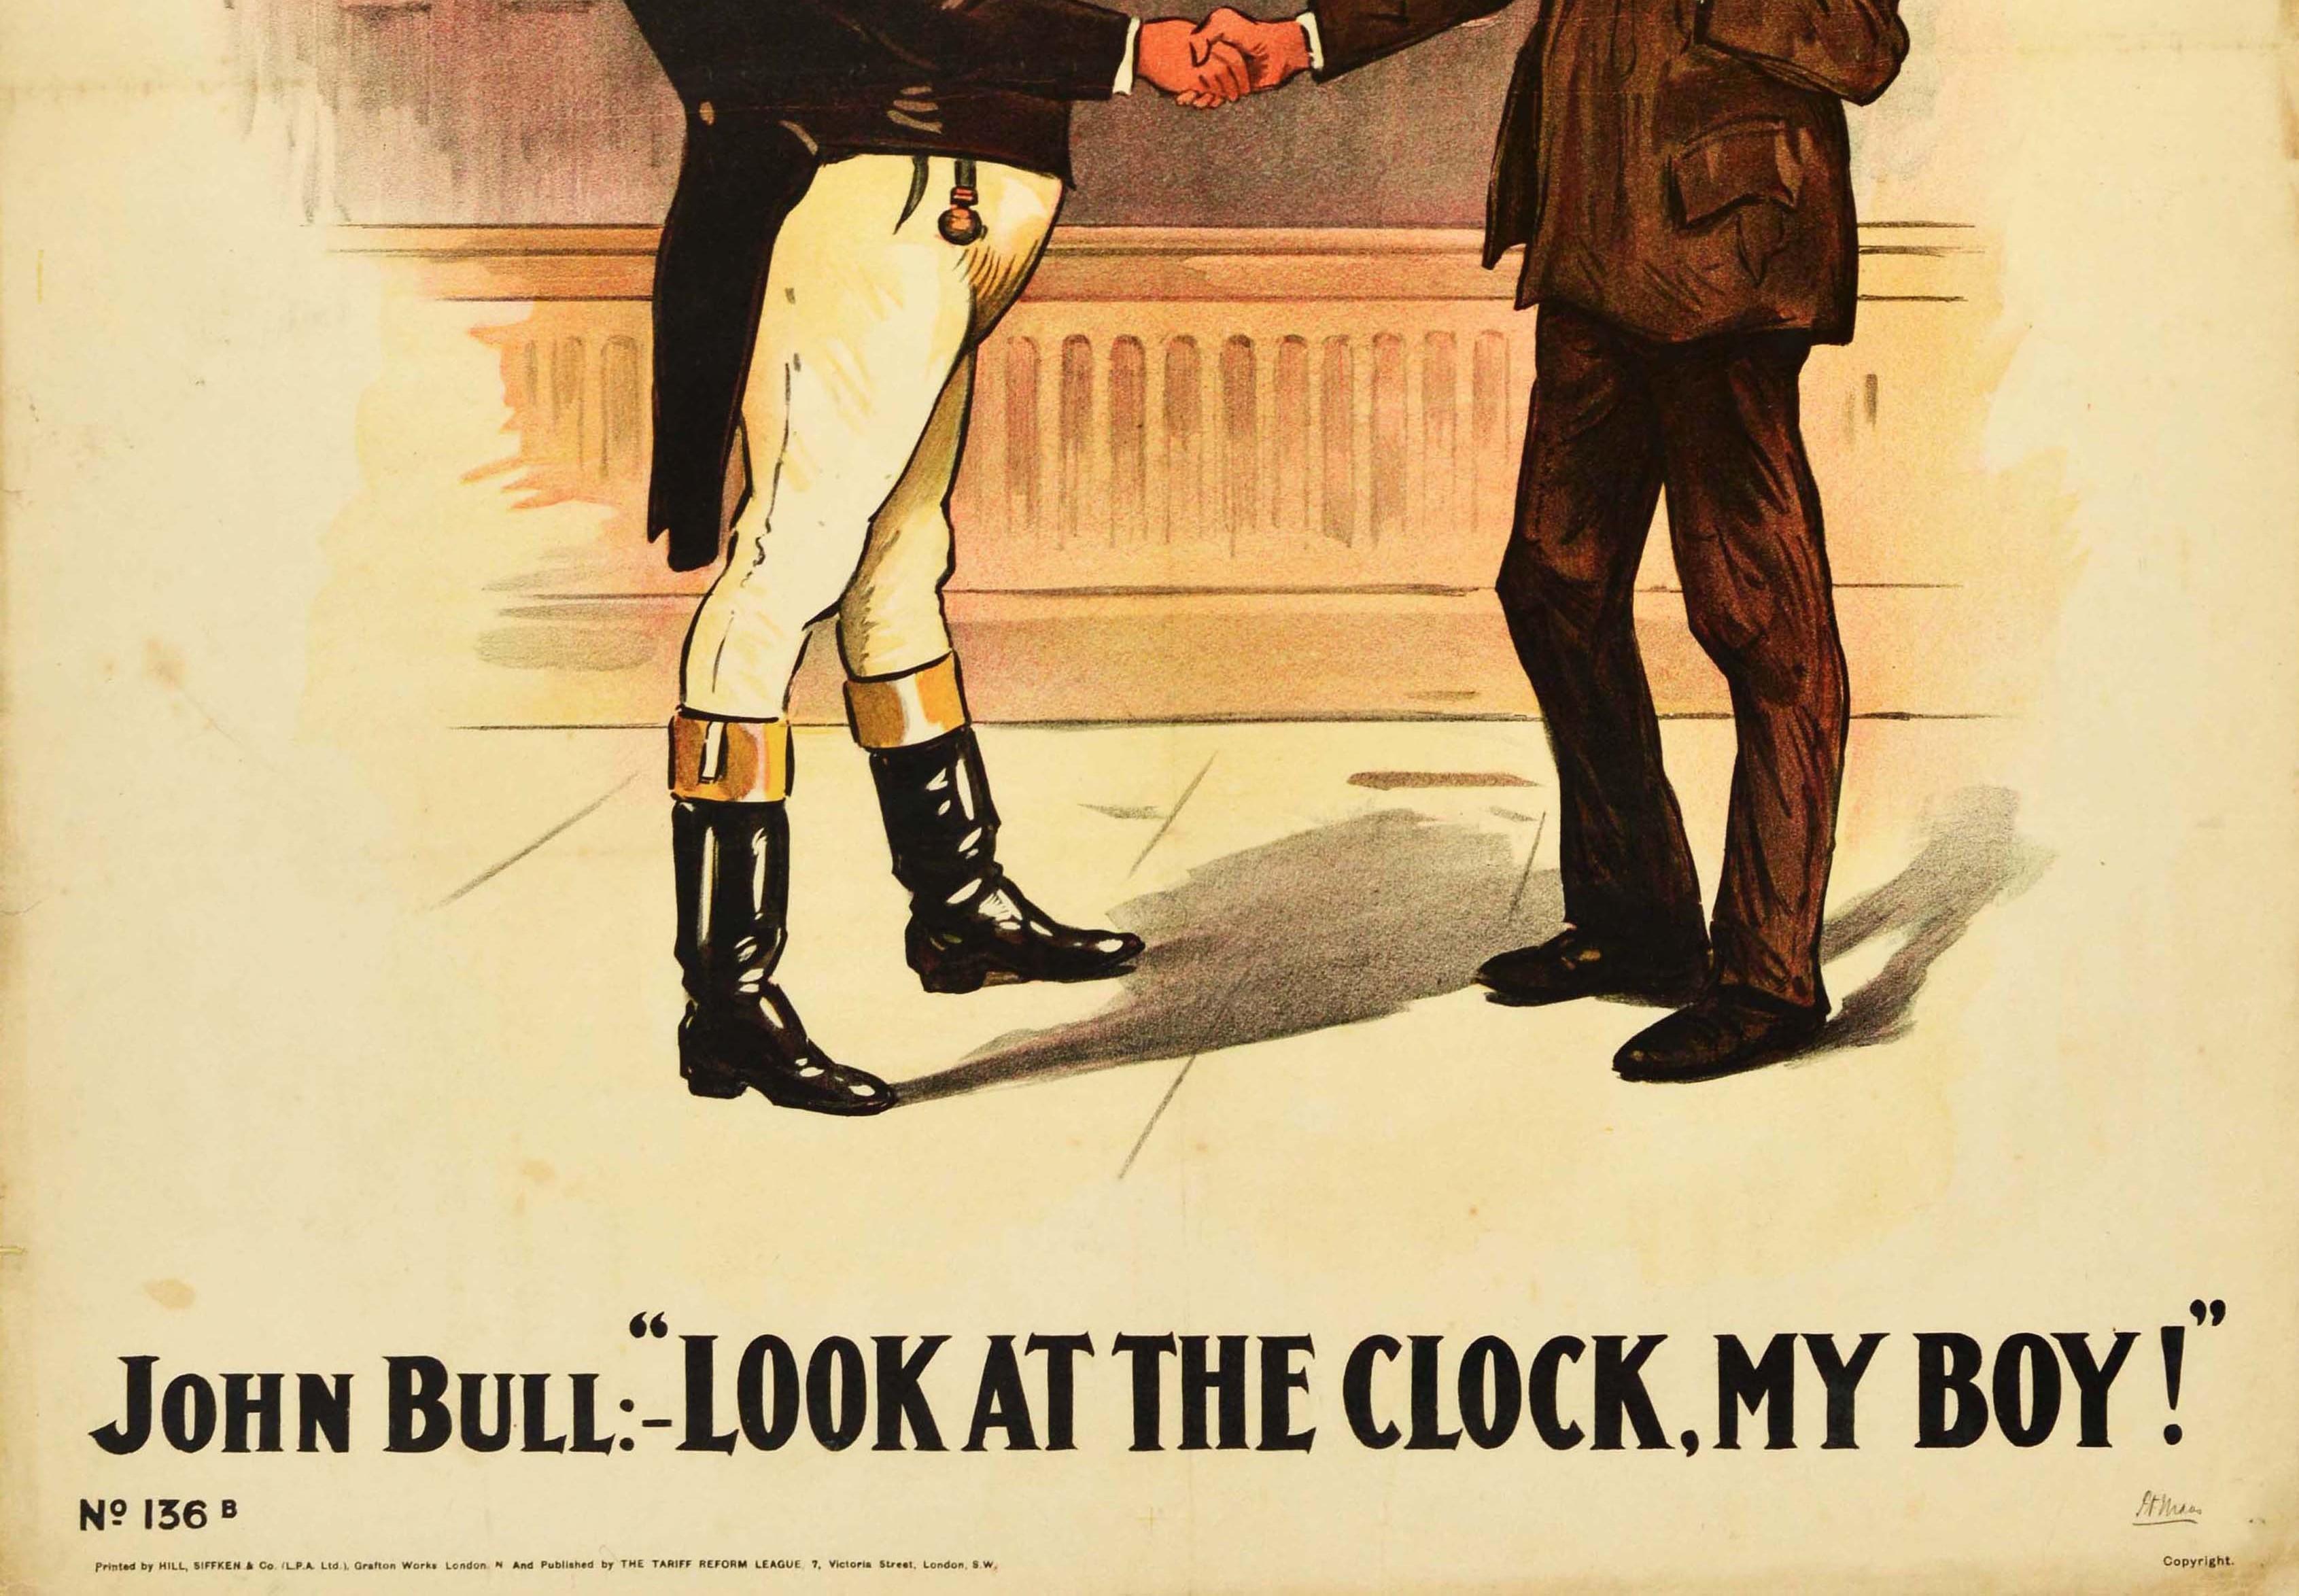 Original Antikes politisches Poster „This Time Clock“ Tarifreform, John Bull Design (Orange), Print, von Unknown